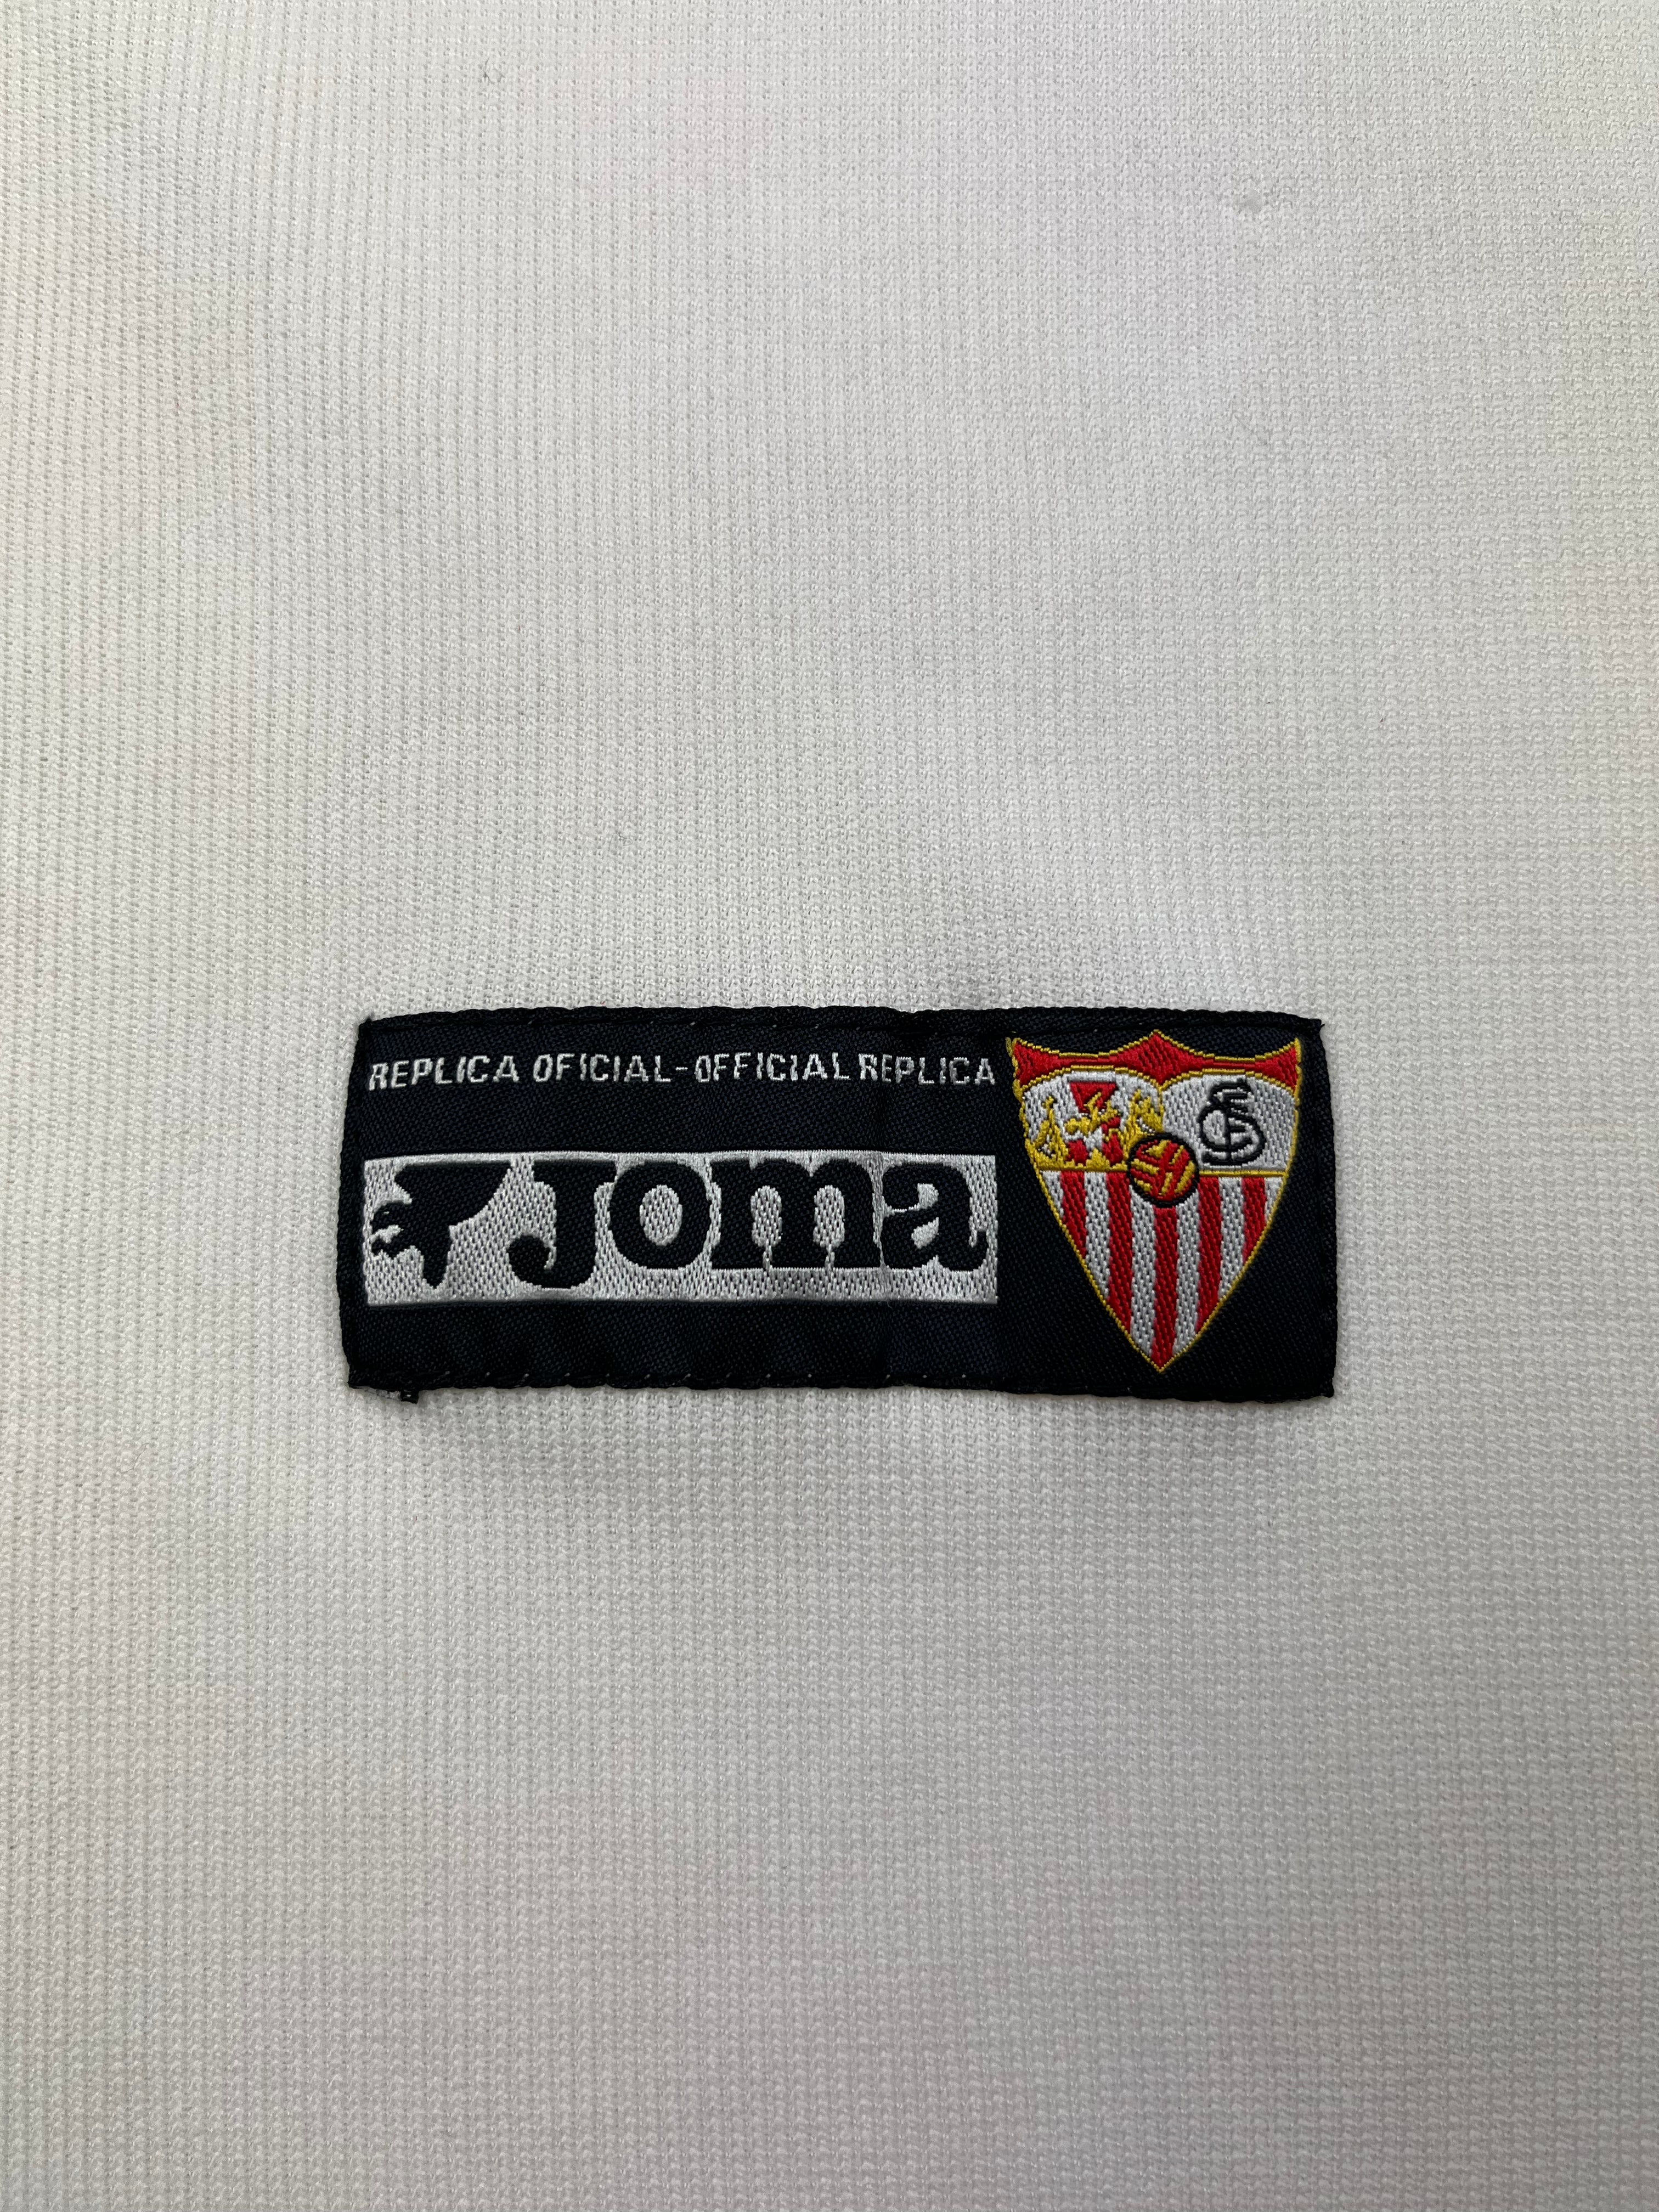 2004/05 Camiseta de local del Sevilla (S) 9/10